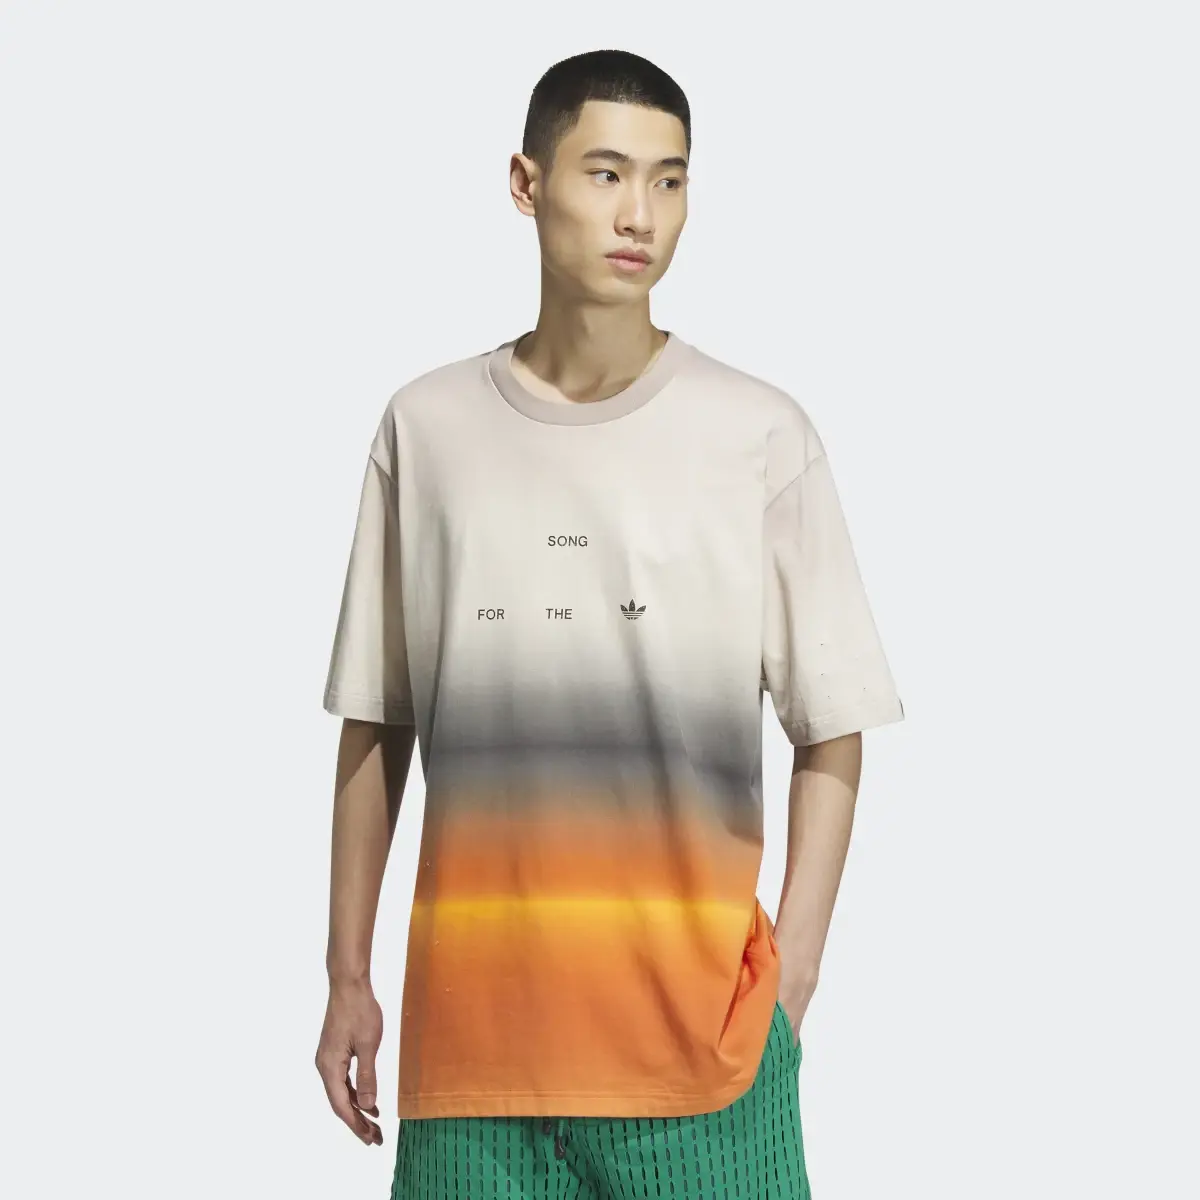 Adidas SFTM T-Shirt (Gender Neutral). 2